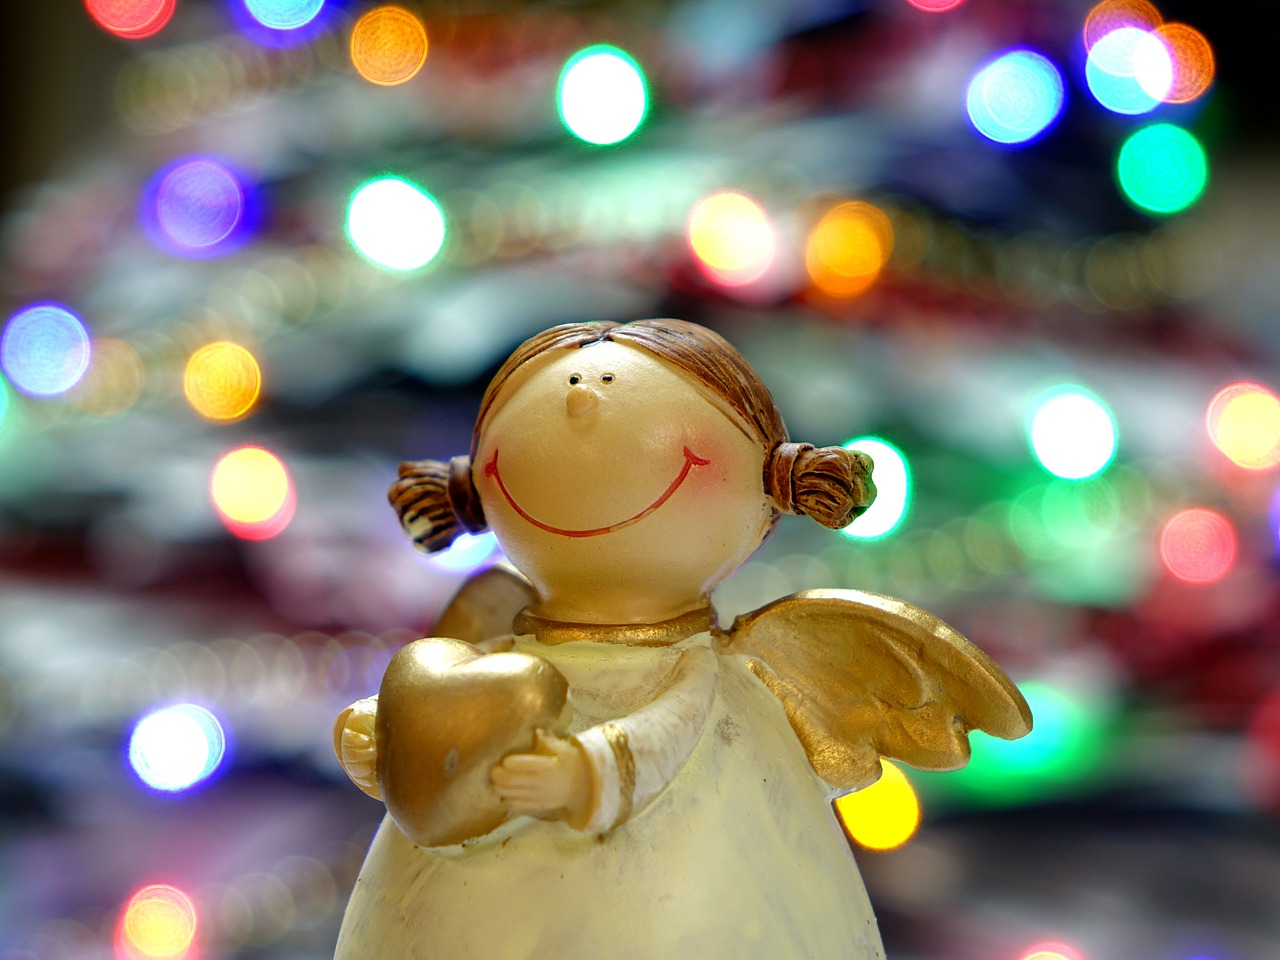 A Christmas angel decoration.